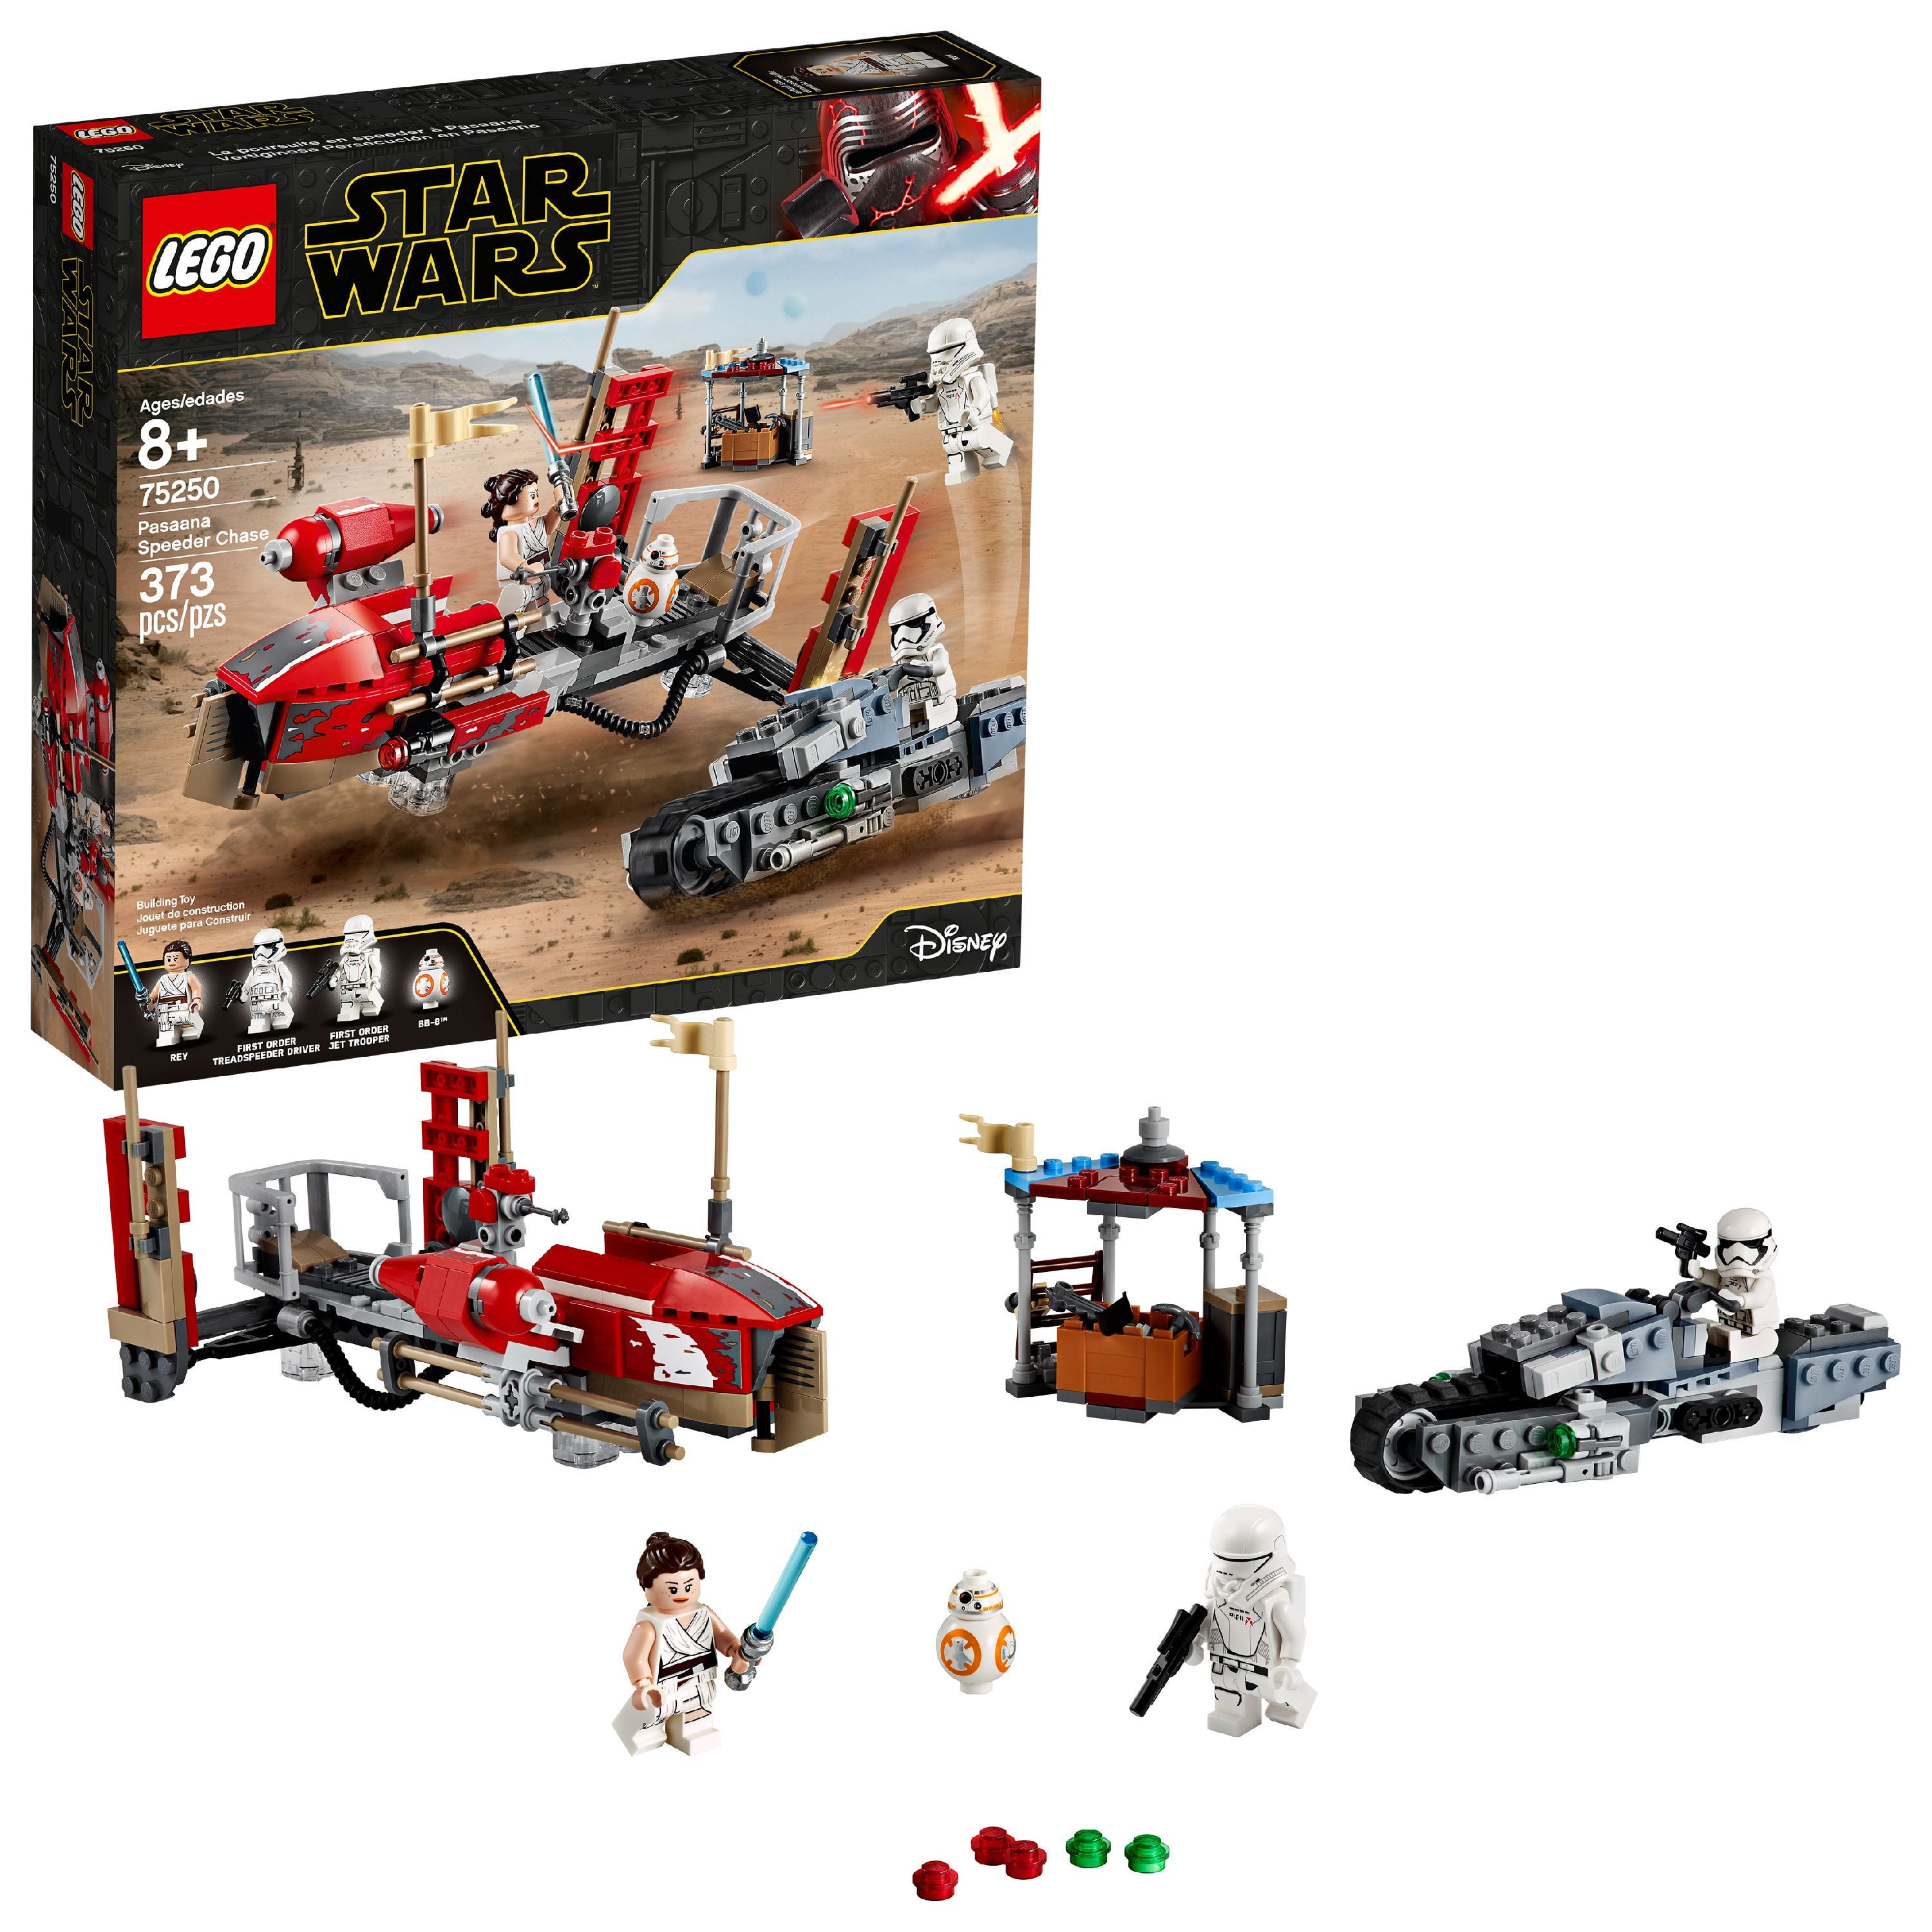 LEGO Wars: Rise of Skywalker Pasaana Speeder Chase 75250 - Walmart.com